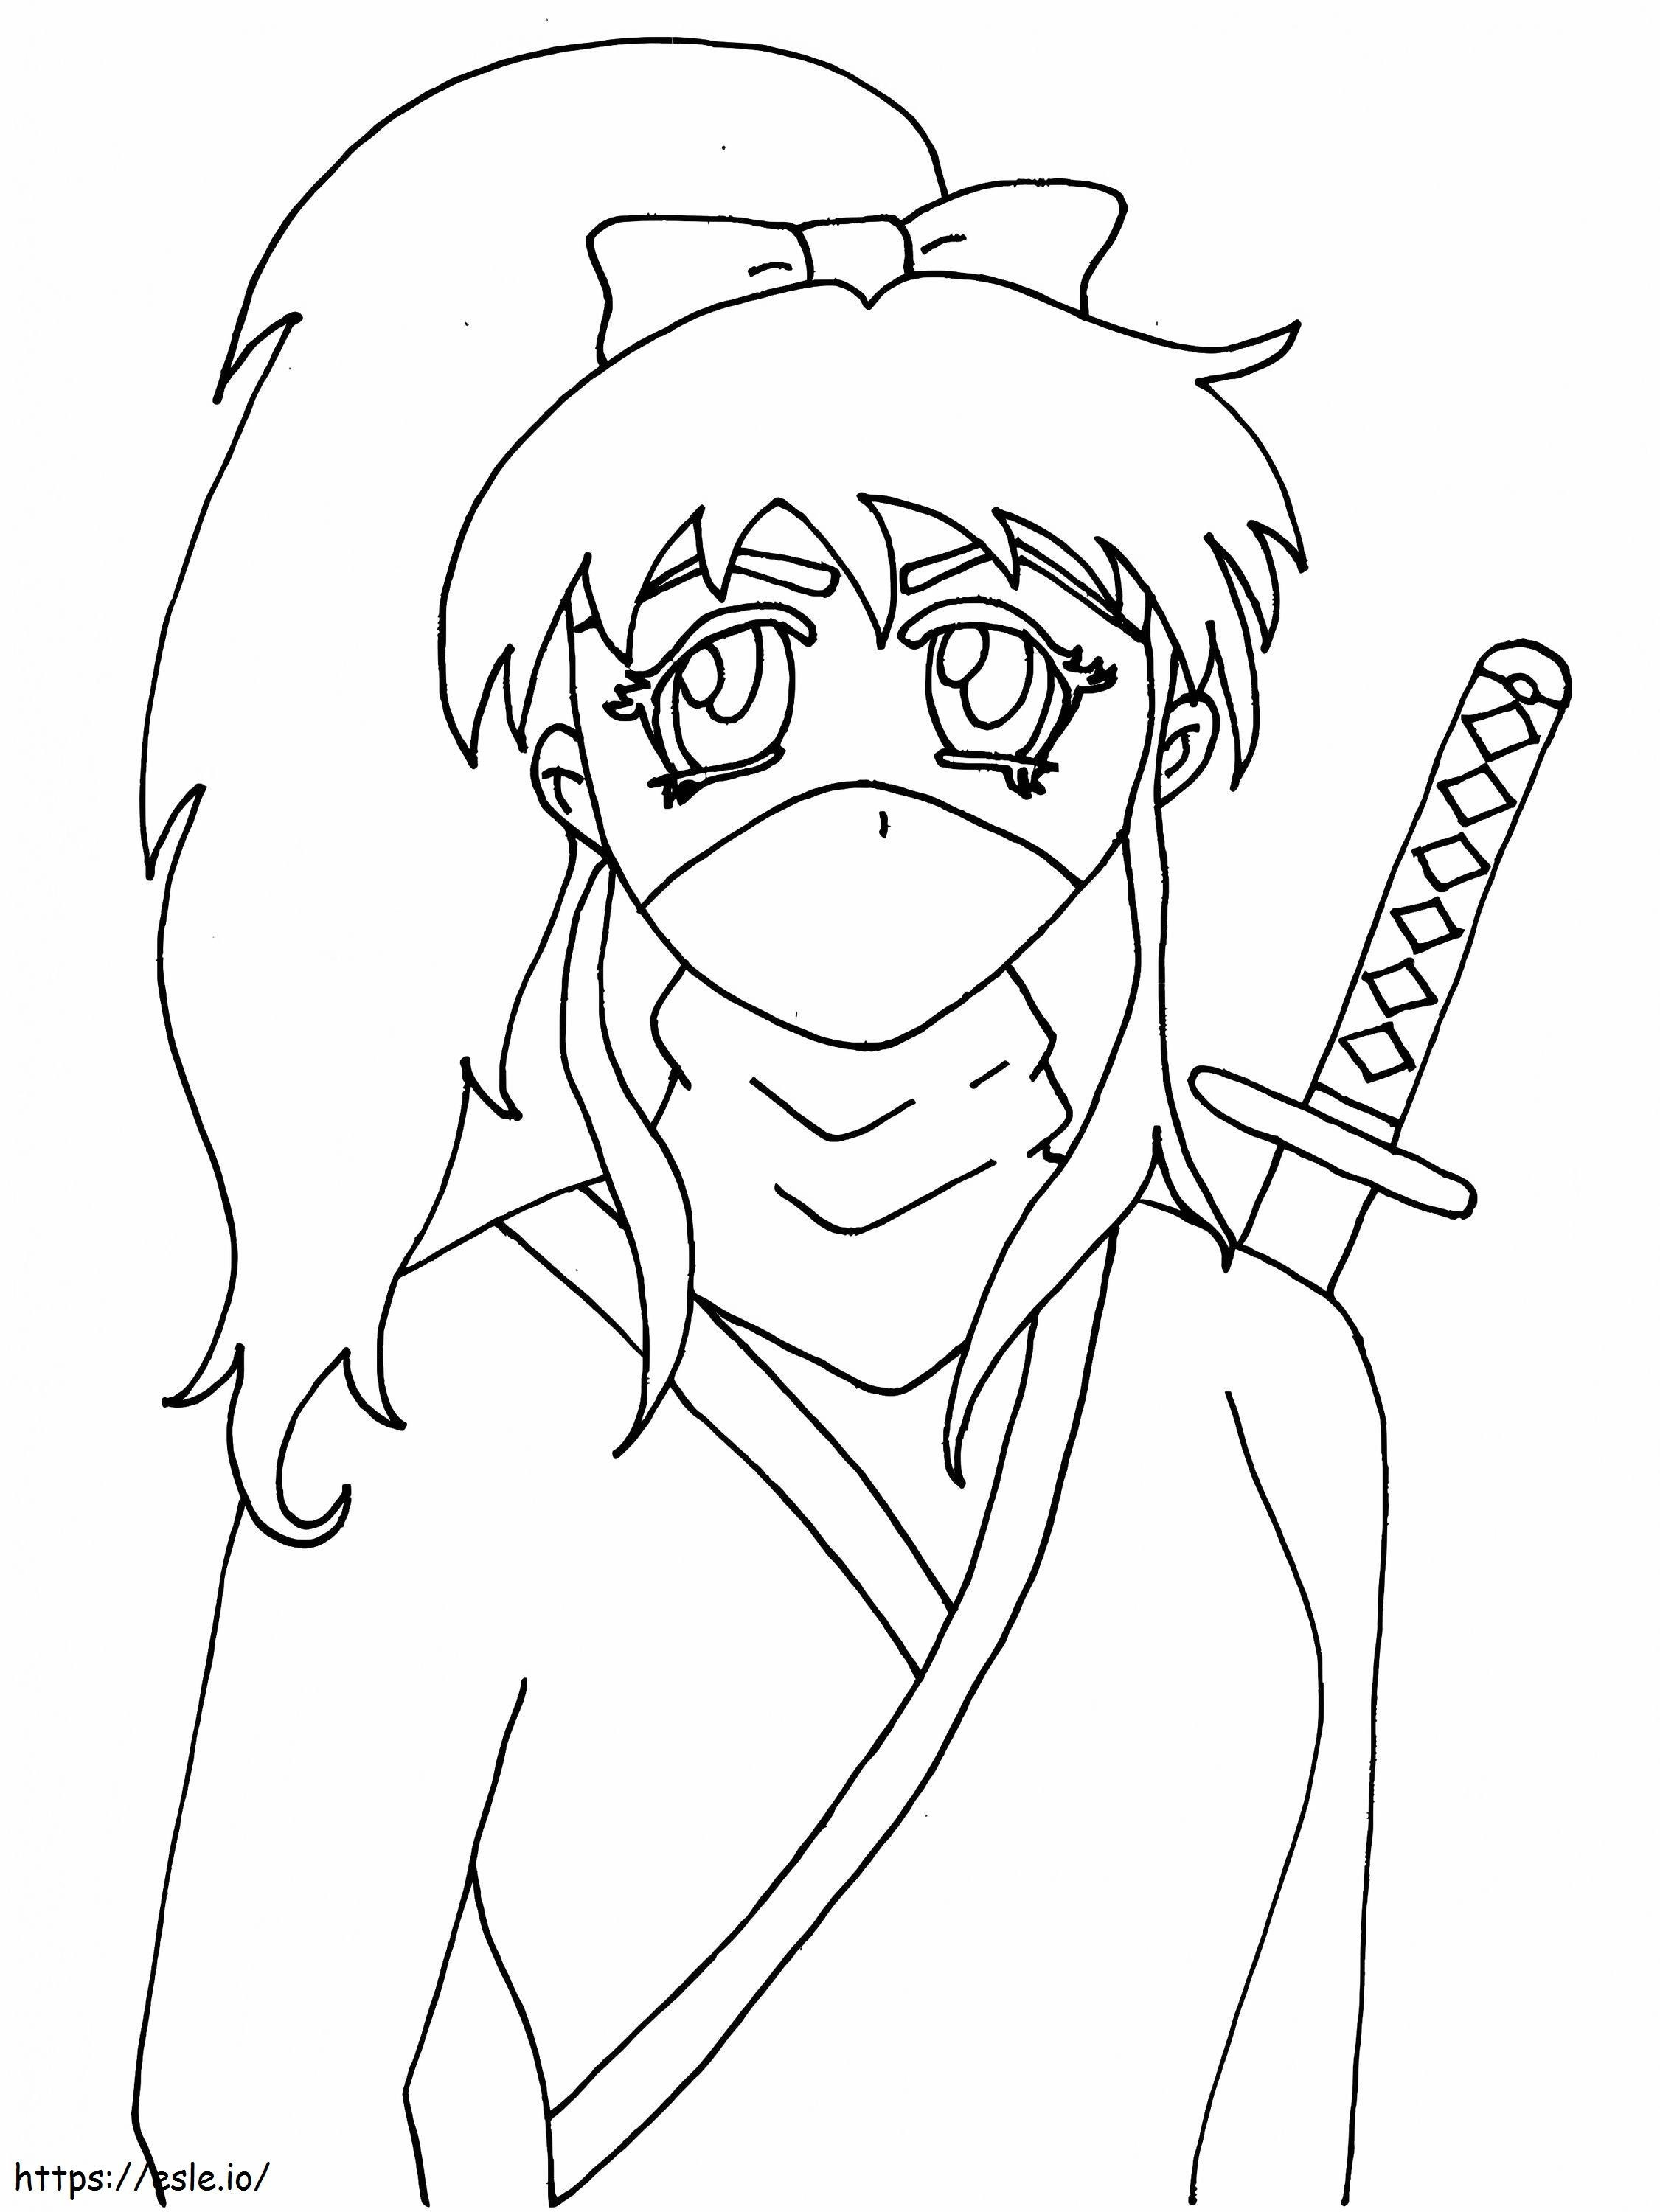 1543975493 Ninja Japan coloring page